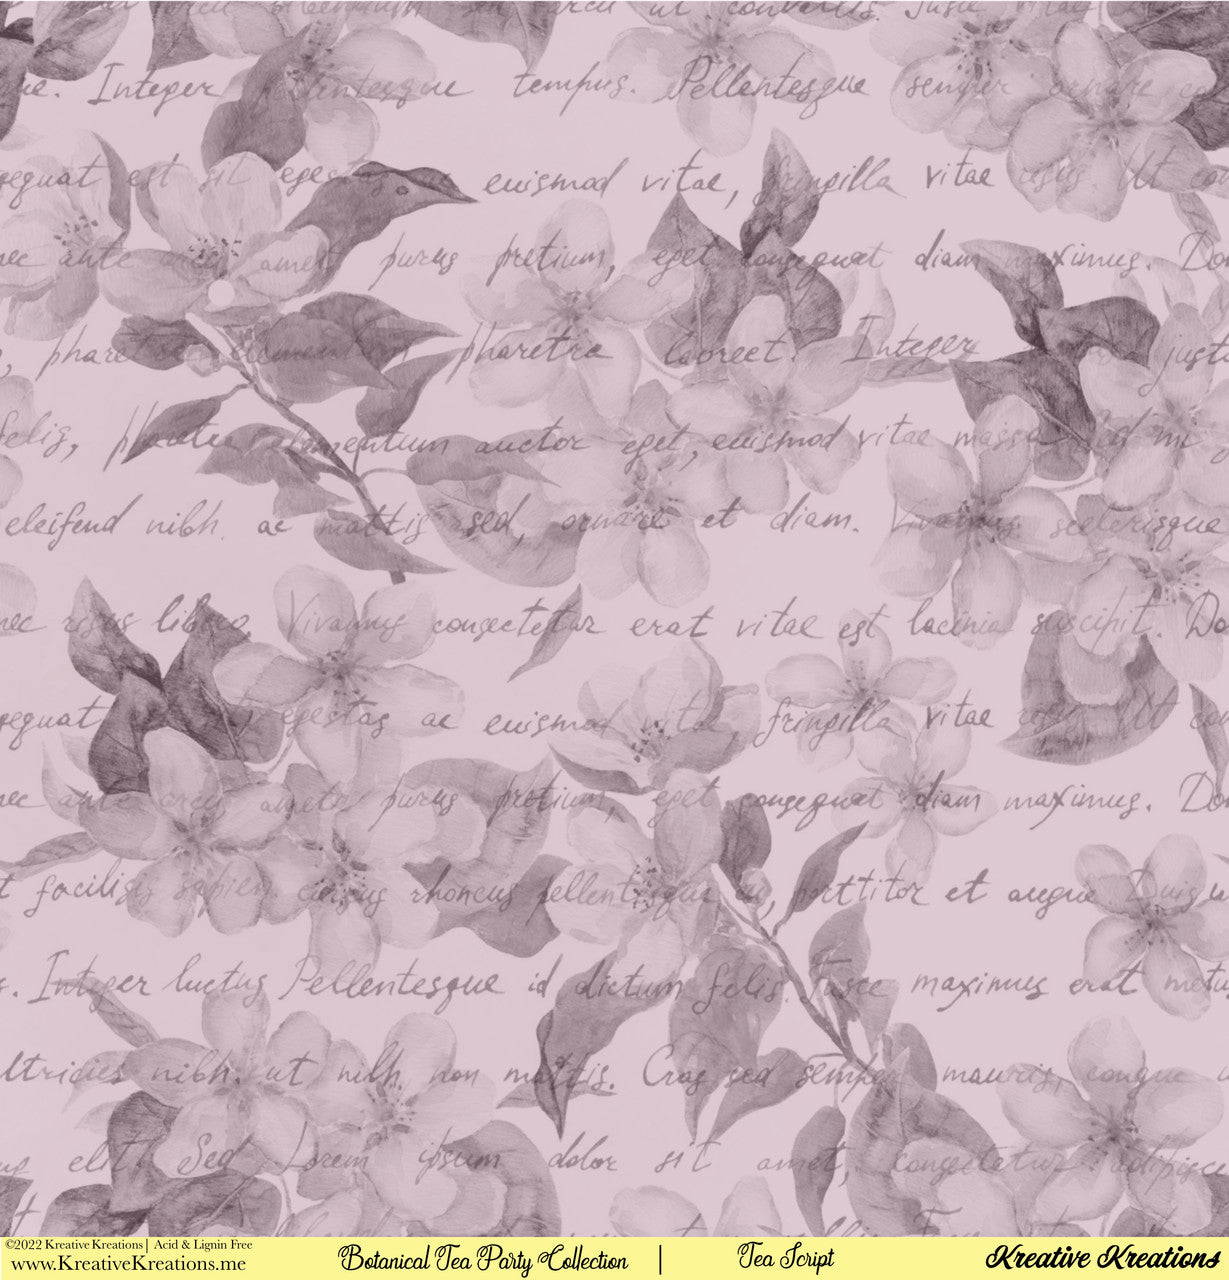 Kreative Kreations Botanische Tea Party 30 x 30 cm papiercollectie